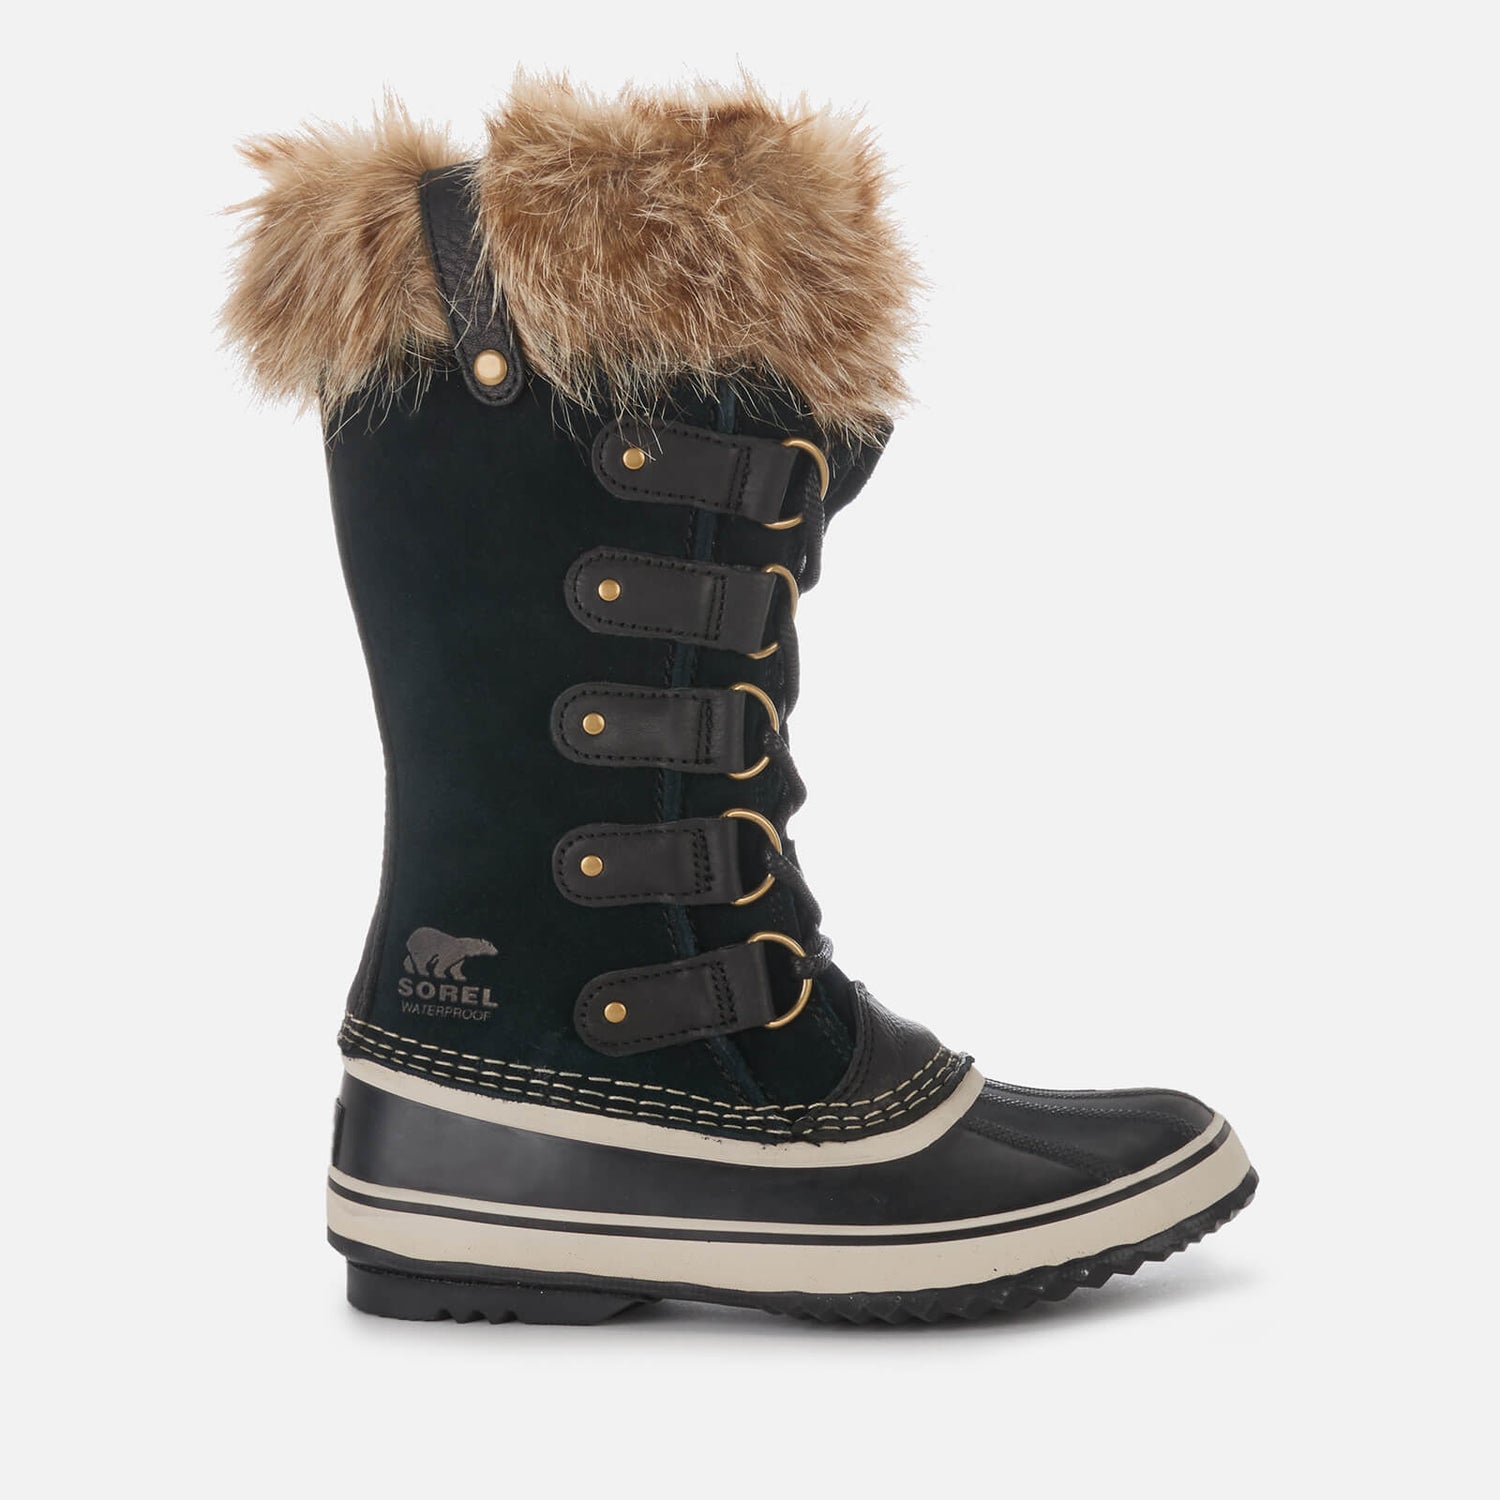 Sorel Women's Joan of Arctic Hiker Style Knee High Boots - Black Stone ...